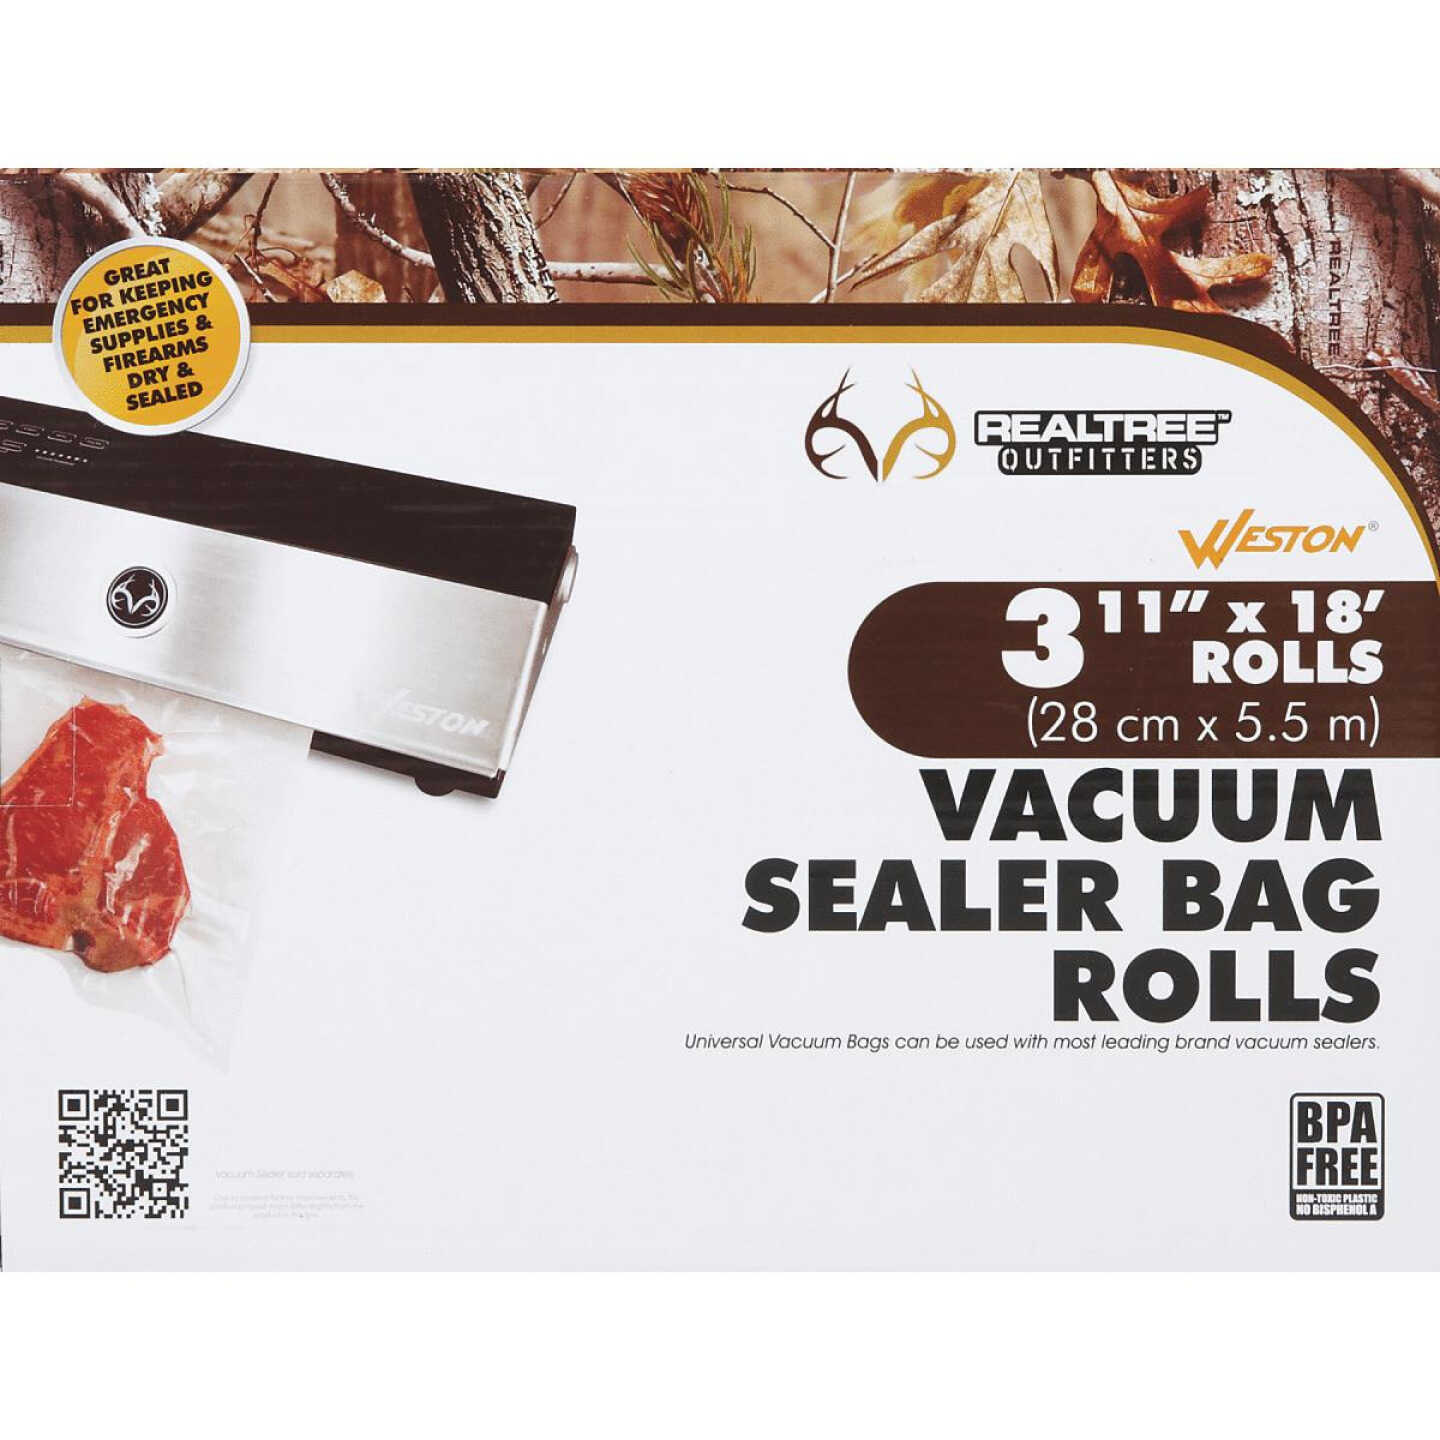 50 Count Gallon Vacuum Sealer Bags